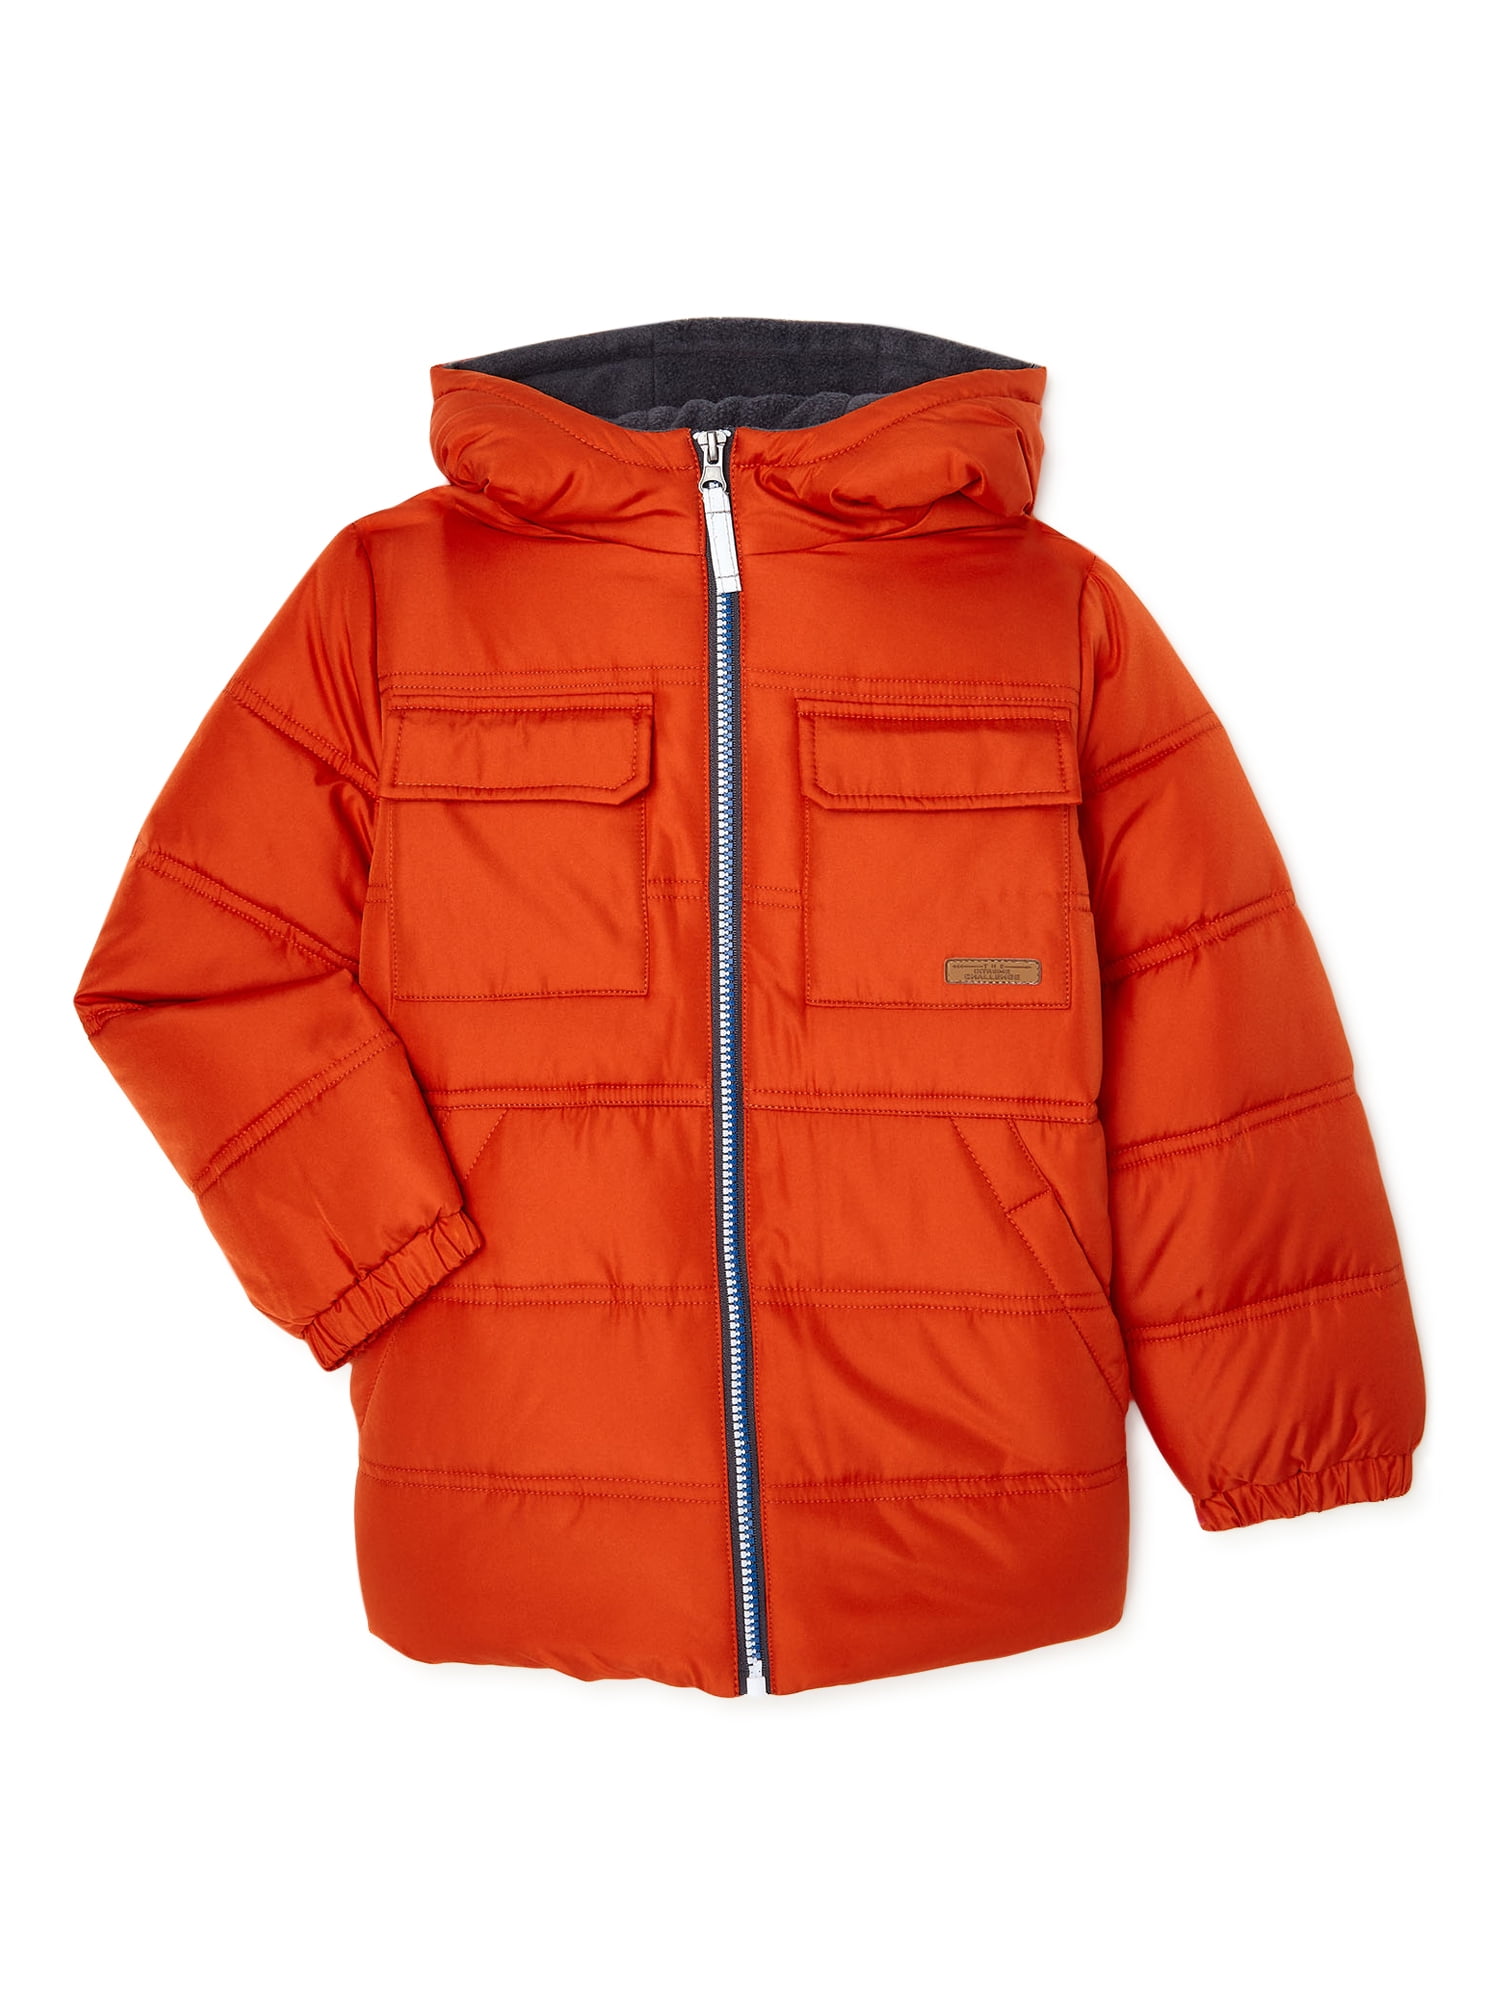 DKNY Boys Heavyweight Ski Parka Polar Fleece Lined Jacket with Sherpa Lined Hood